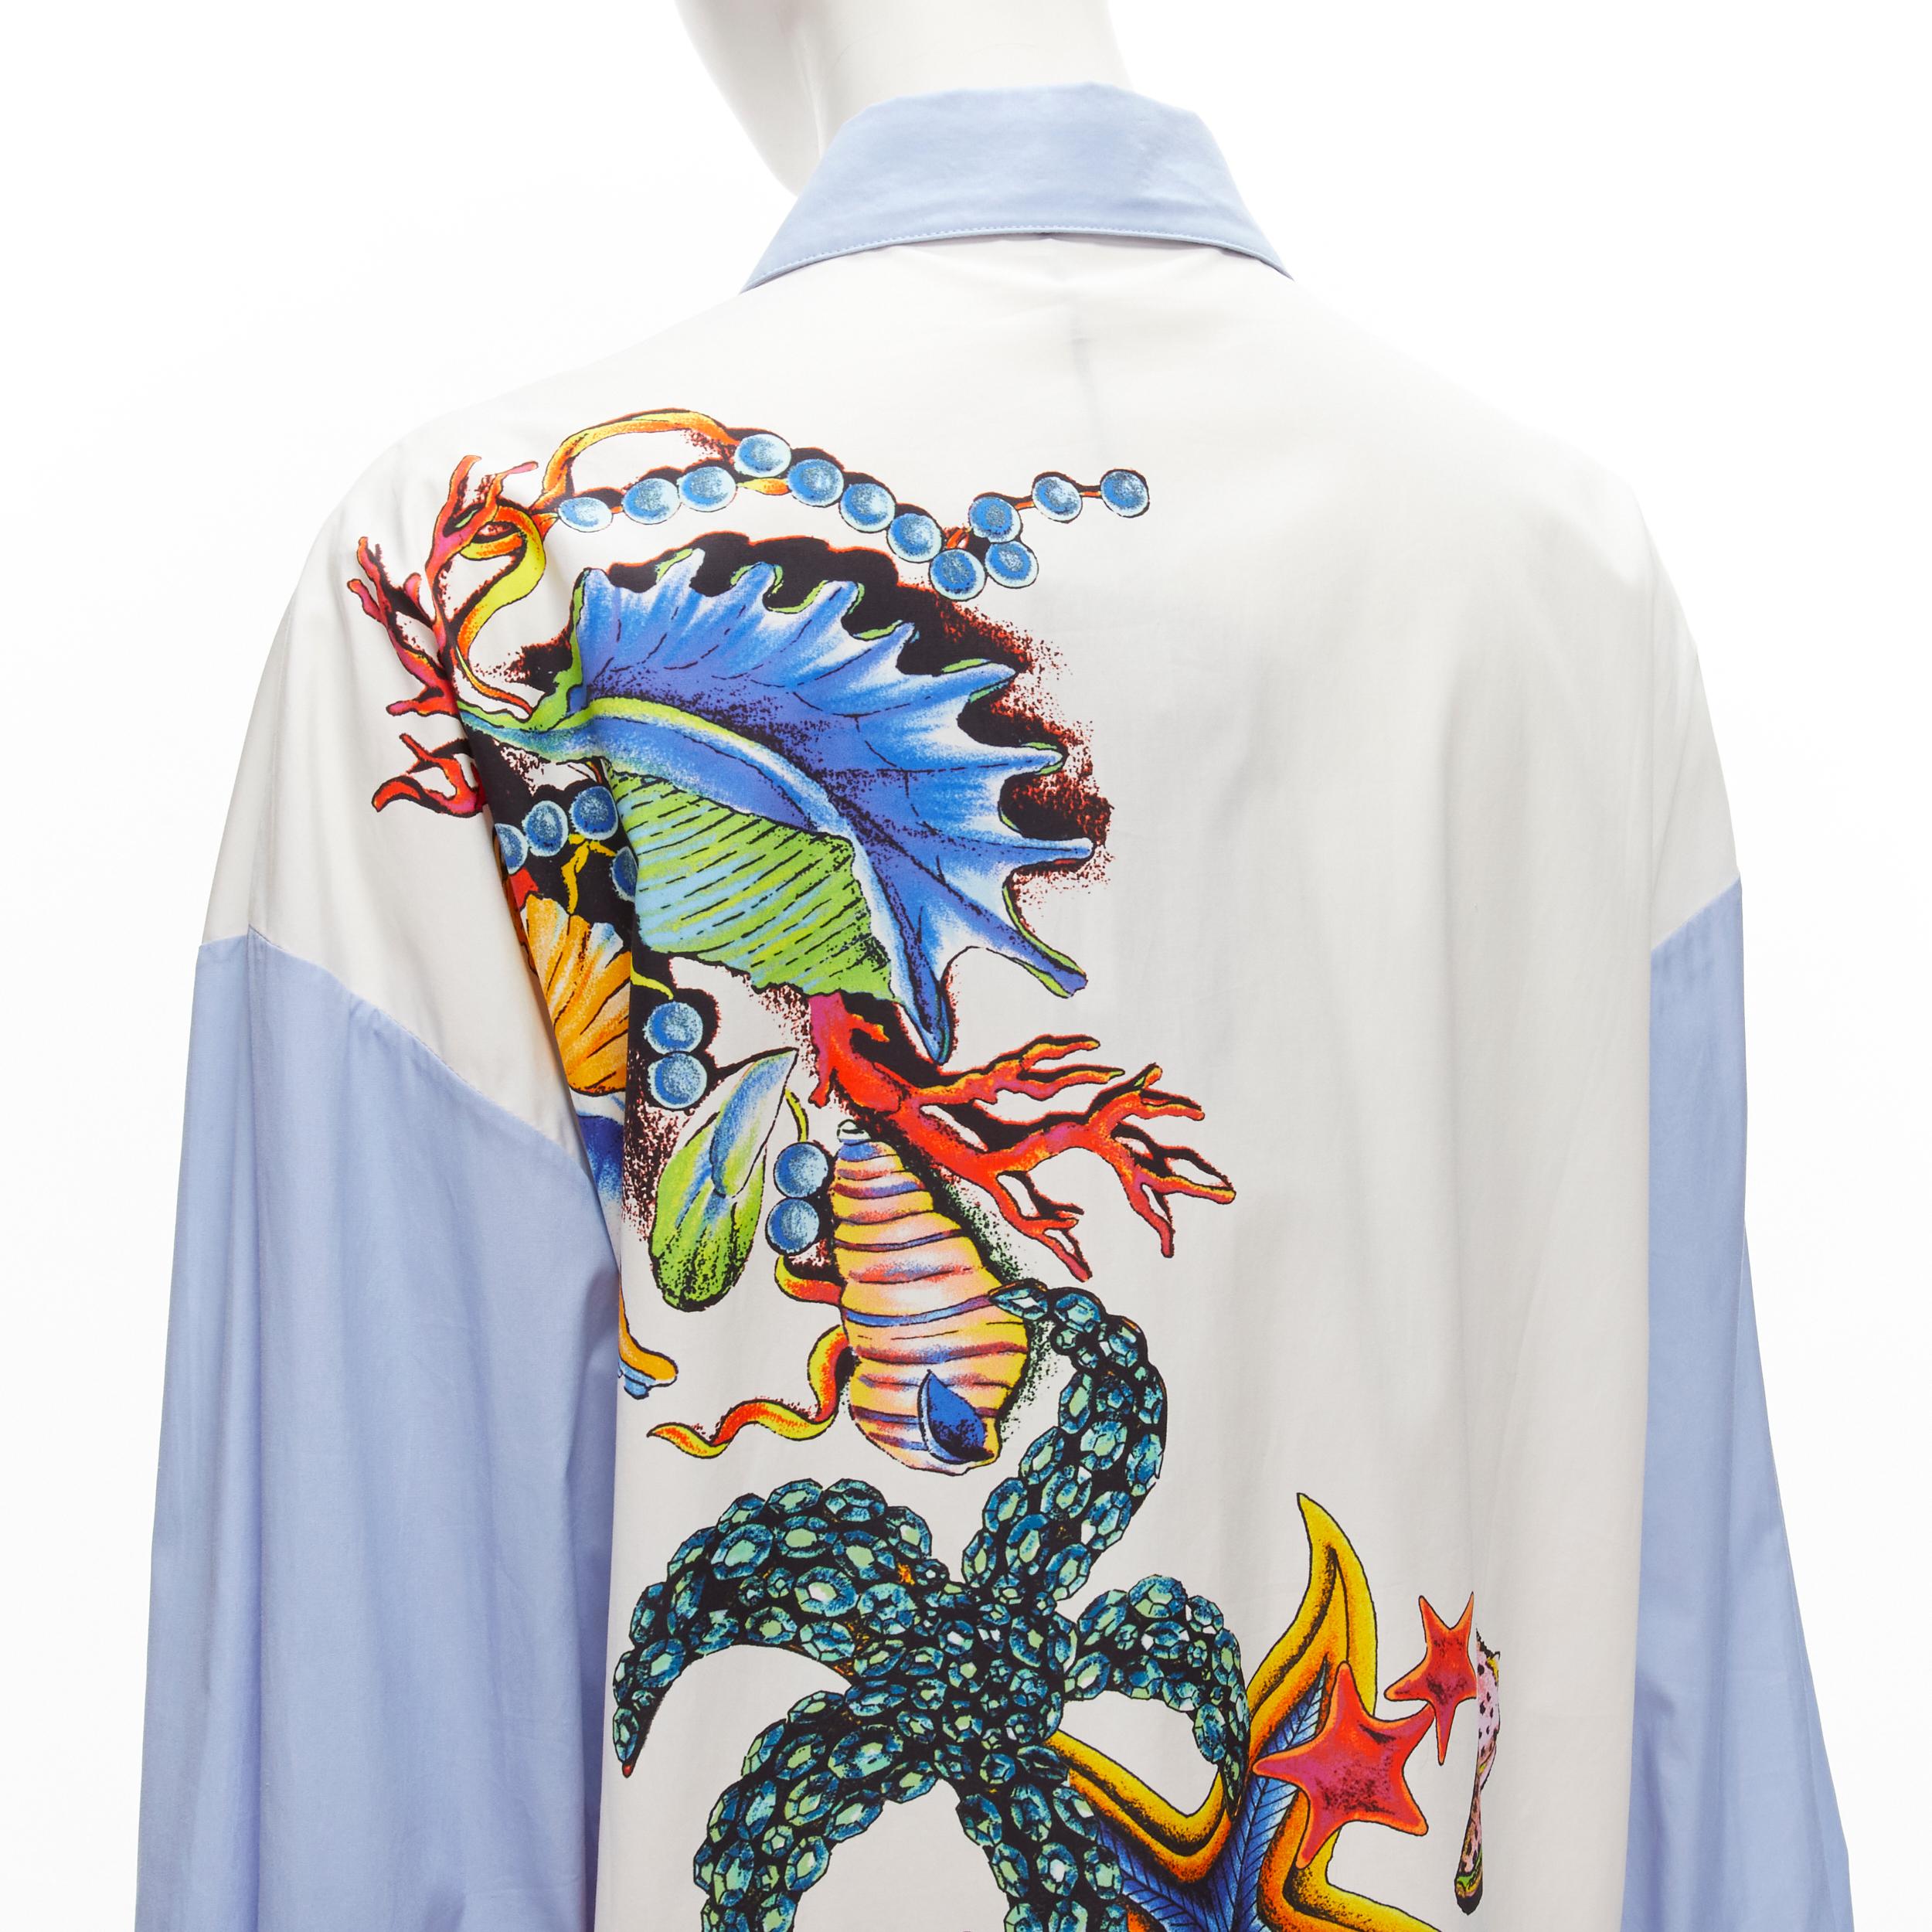 VERSACE Tresor De La Mer 2021 starfish blue white colorblock shirt IT40 S
Reference: TGAS/C01914
Brand: Versace
Designer: Donatella Versace
Model: A89285 1F00983 5W000
Collection: 2021
Material: Cotton
Color: Blue, White
Pattern: Starfish
Closure: